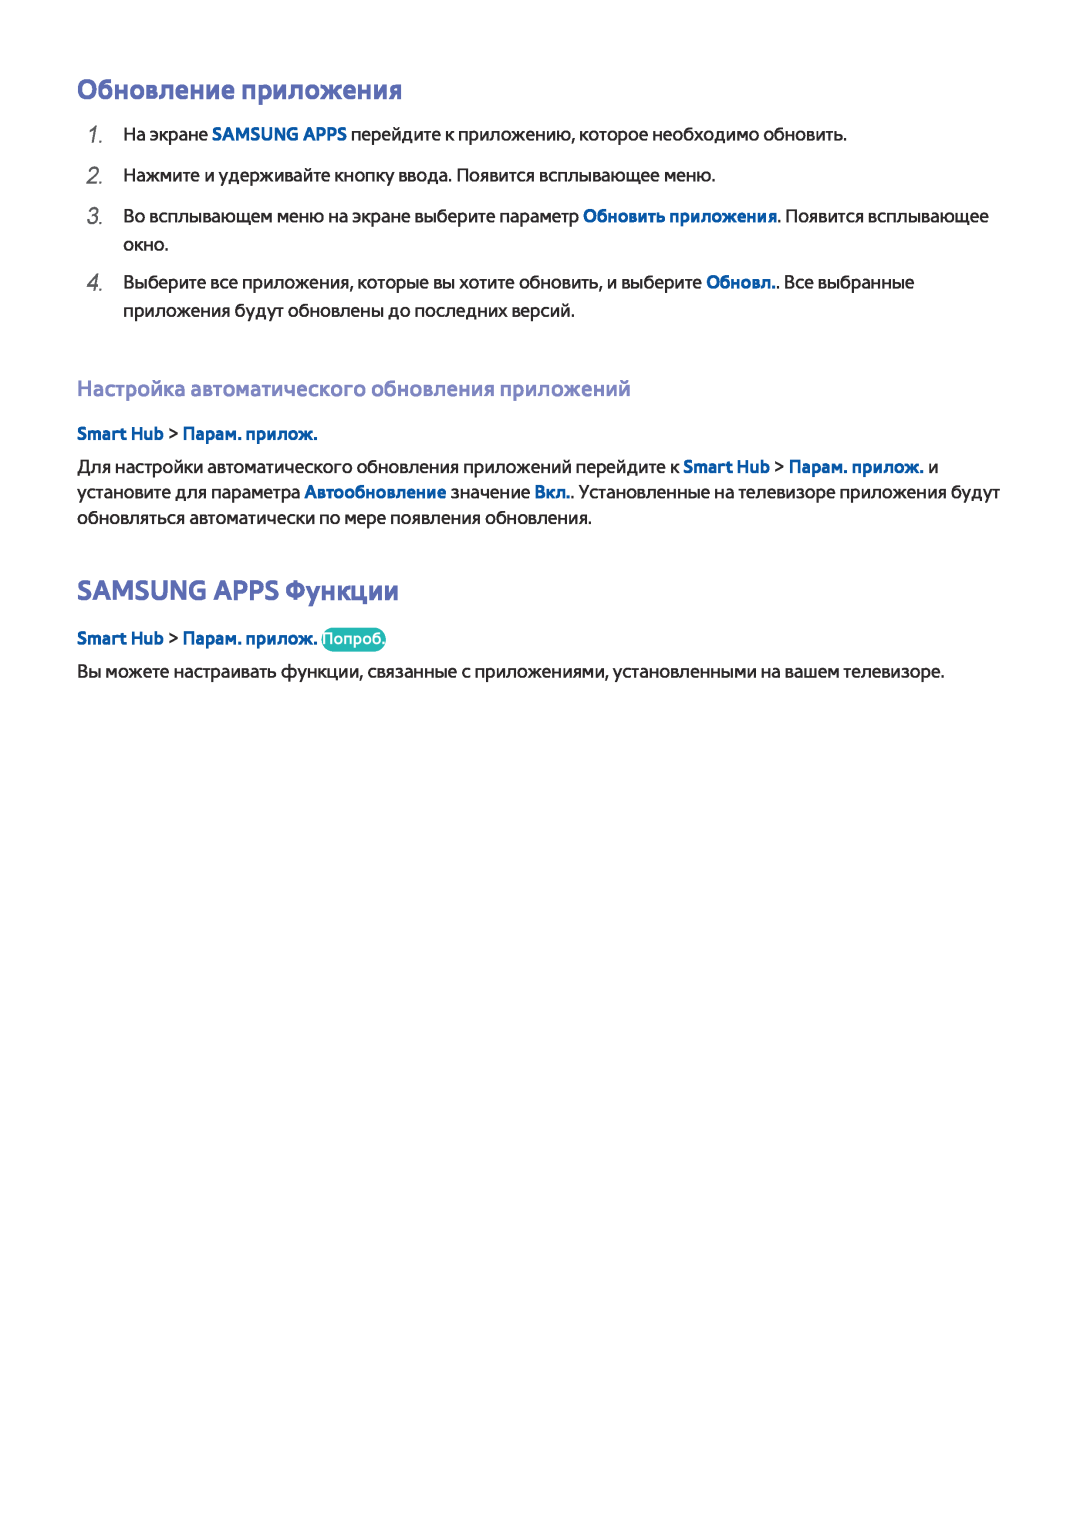 Samsung UE32J5200AKXRU manual Обновление приложения, SAMSUNG APPS Функции, Настройка автоматического обновления приложений 